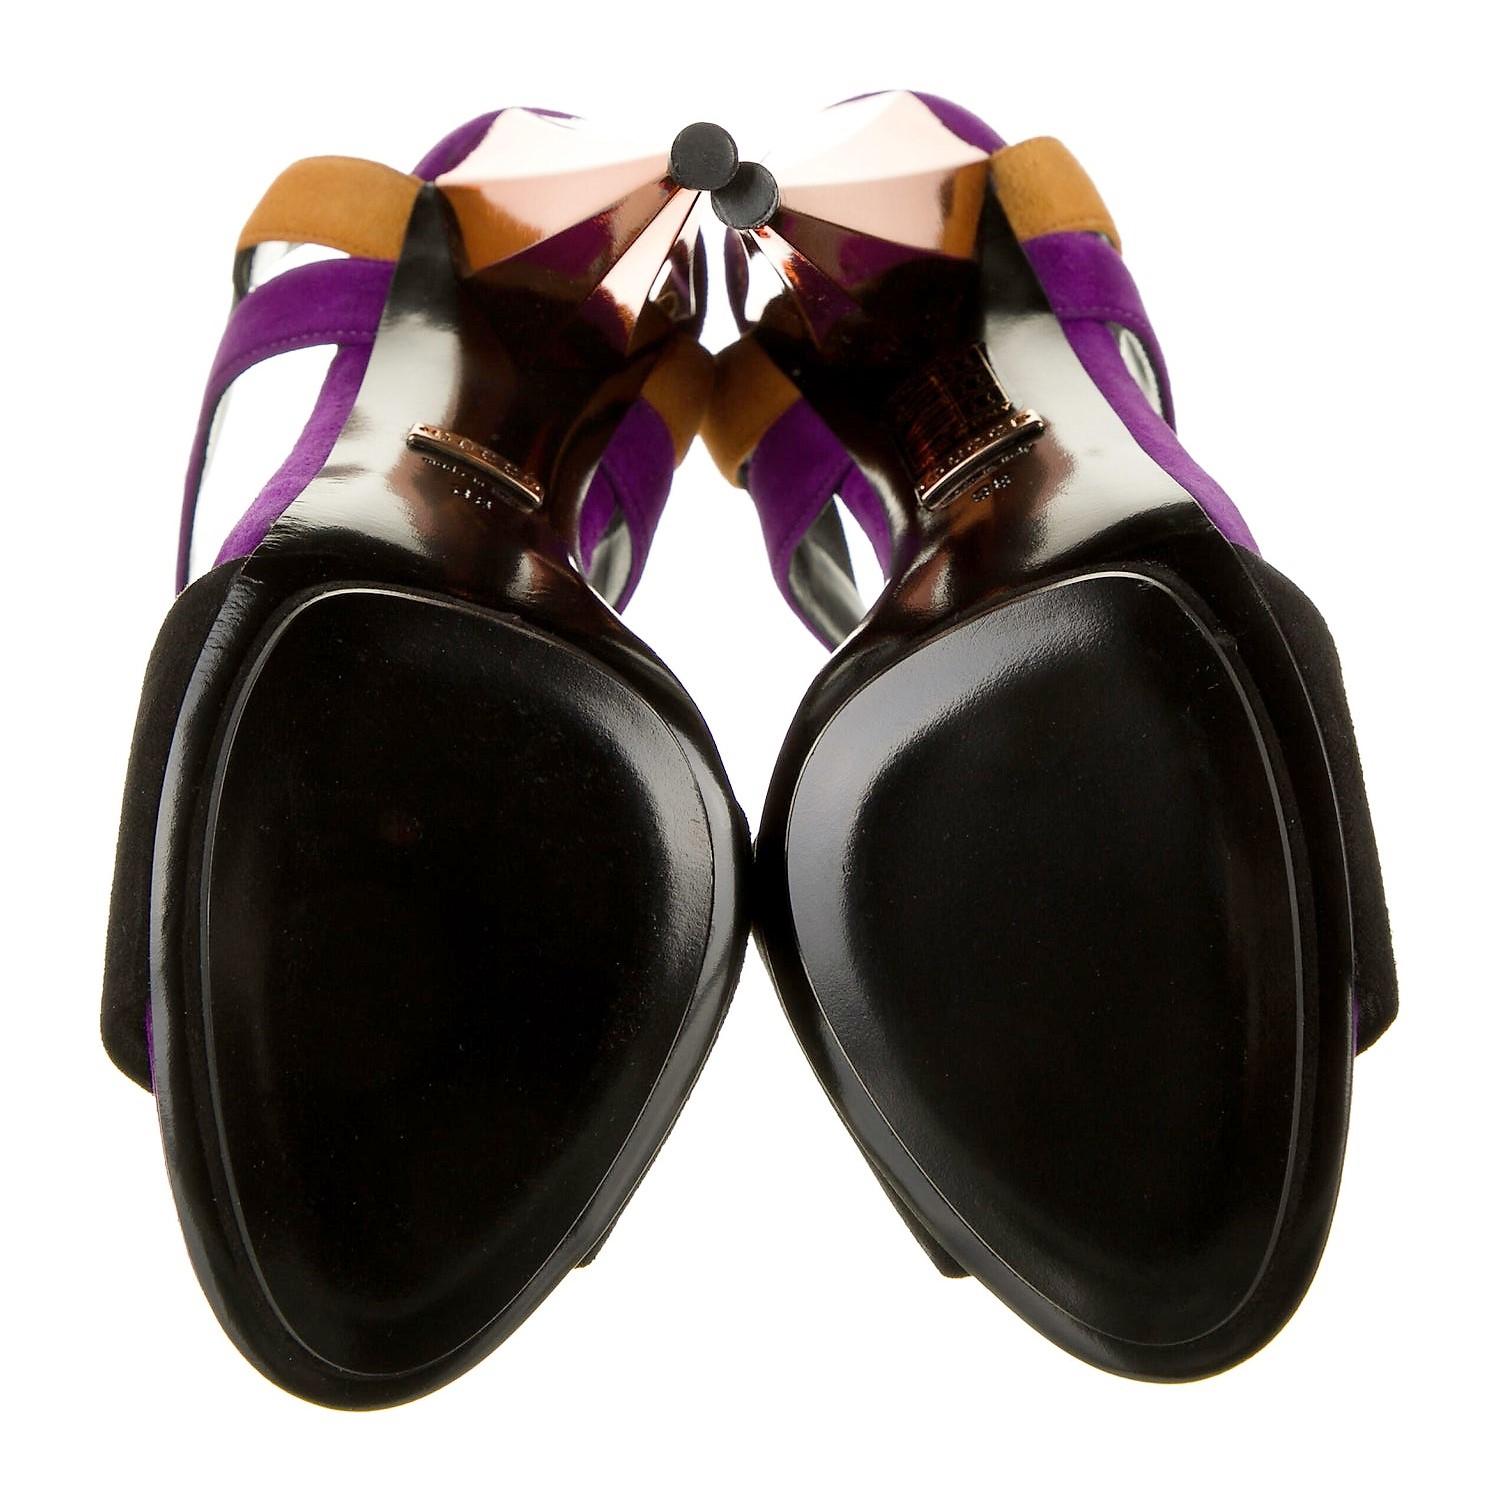 New Gucci Ad Runway 2014 Purple Orange Suede Mirrored Pump Heels Sz 39.5 For Sale 5